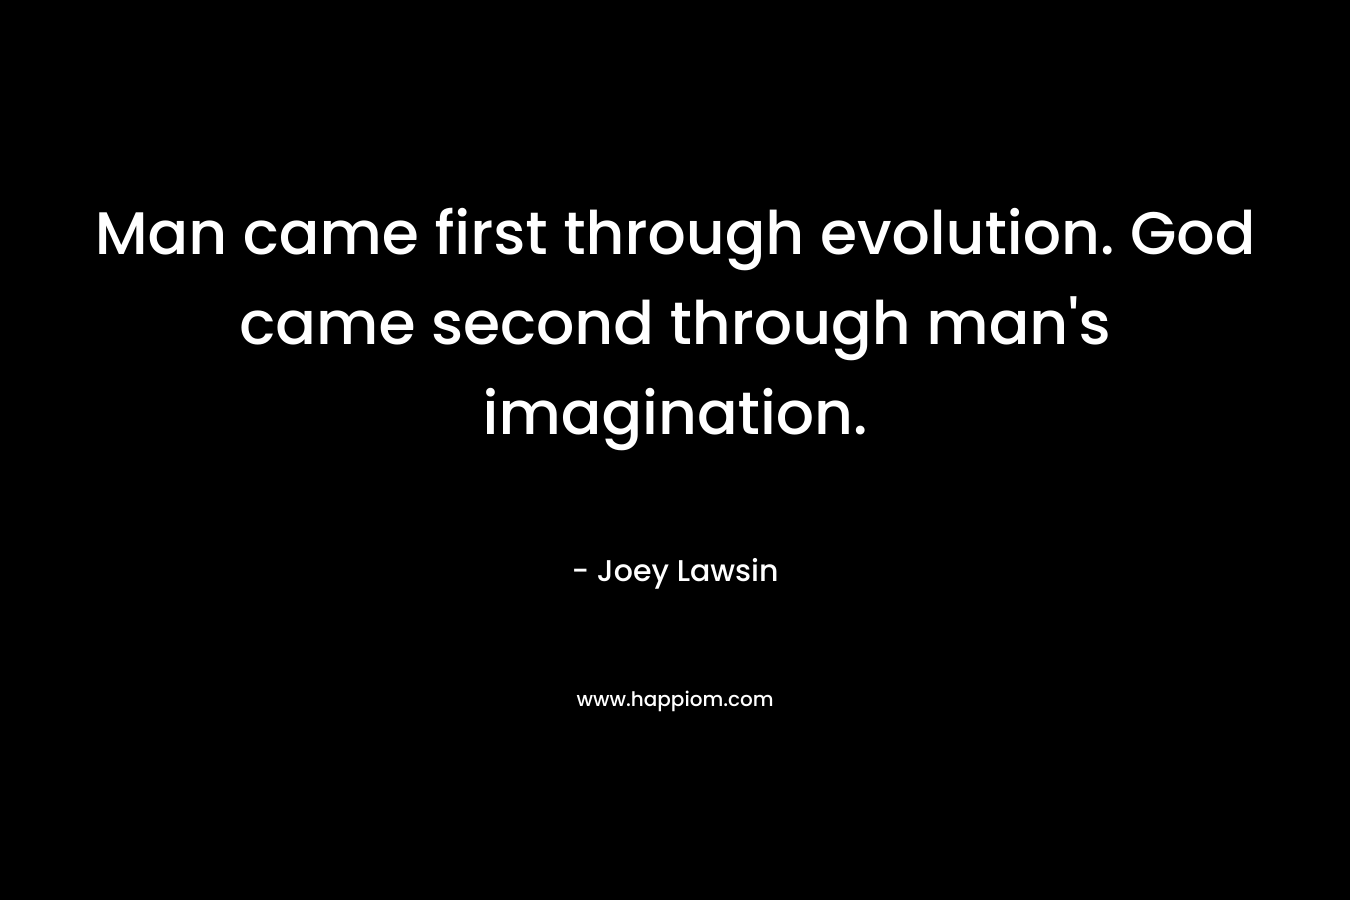 Man came first through evolution. God came second through man's imagination.